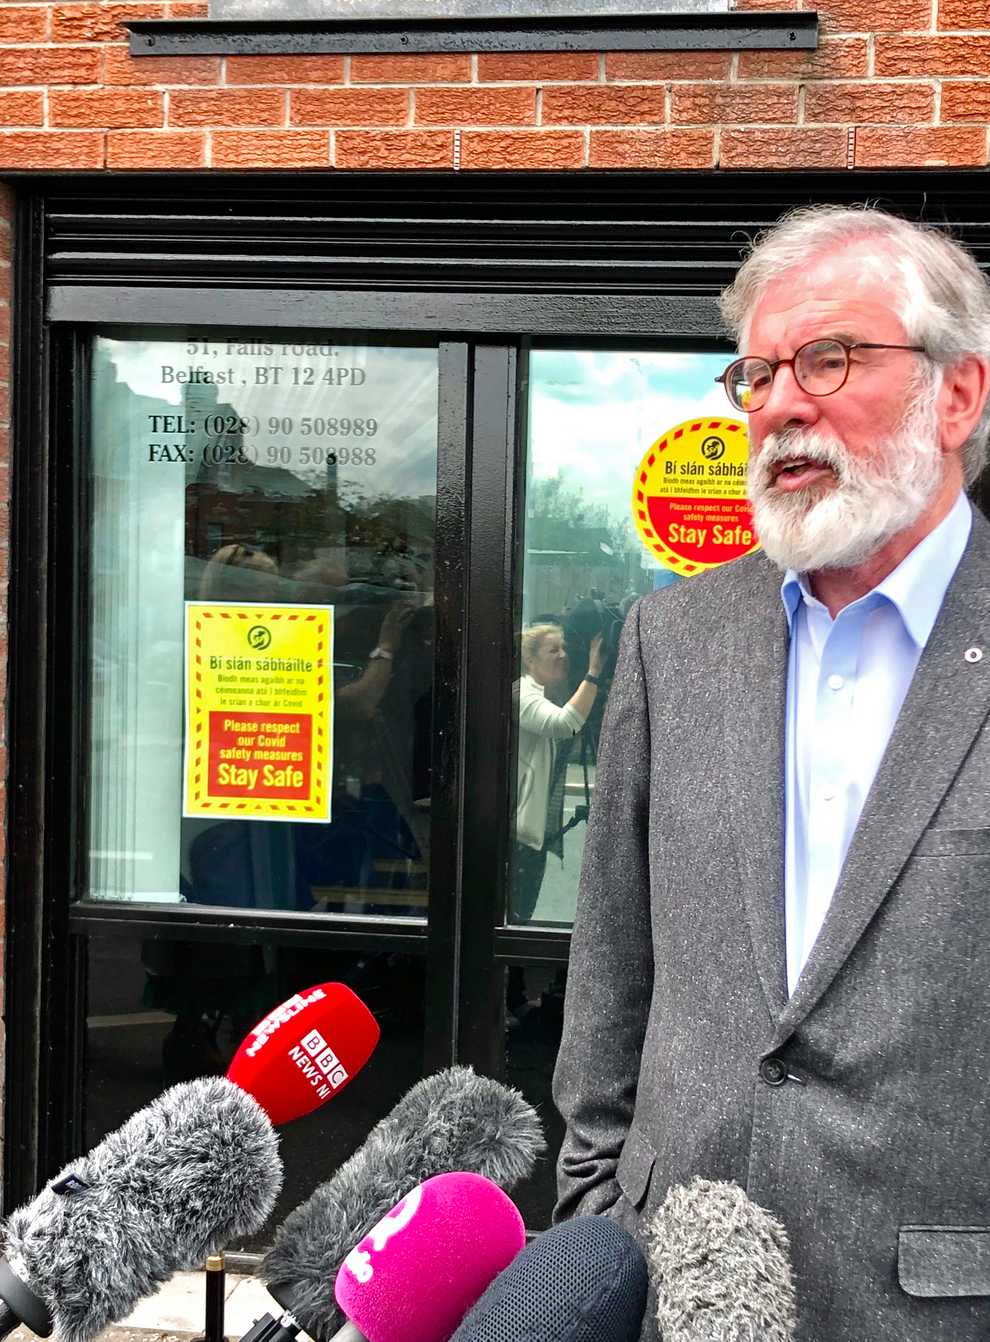 Former Sinn Fein President Gerry Adams reacting to John Hume's death